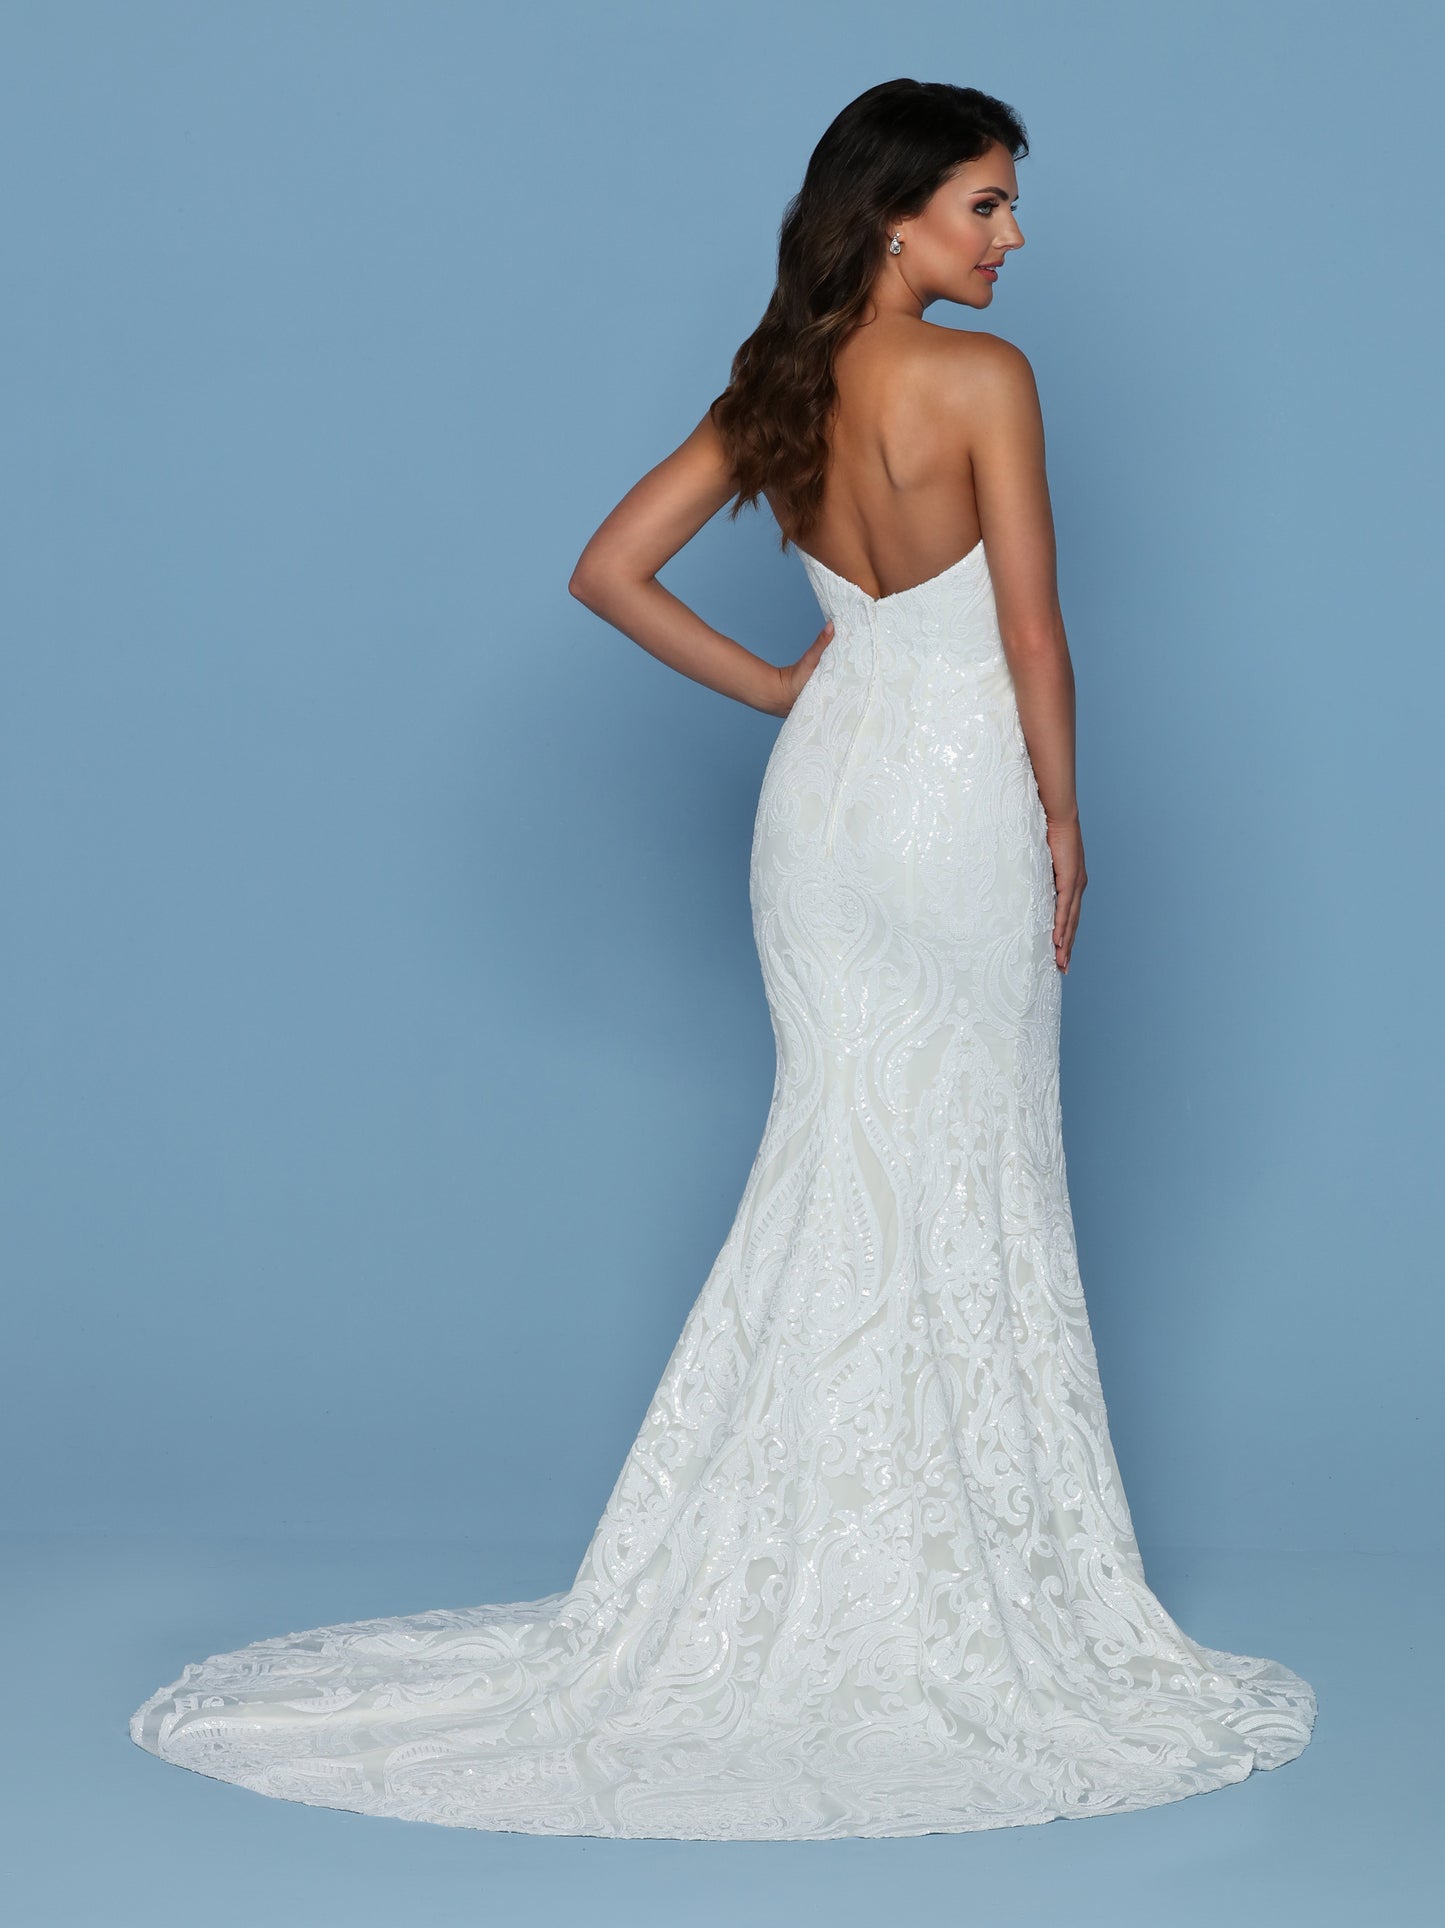 Davinci Bridal 50543 Fitted Sequin Lace Embellished Wedding Dress Strapless Sweetheart neckline fit & Flare Train Glass Slipper Formals Shimmer Glitz